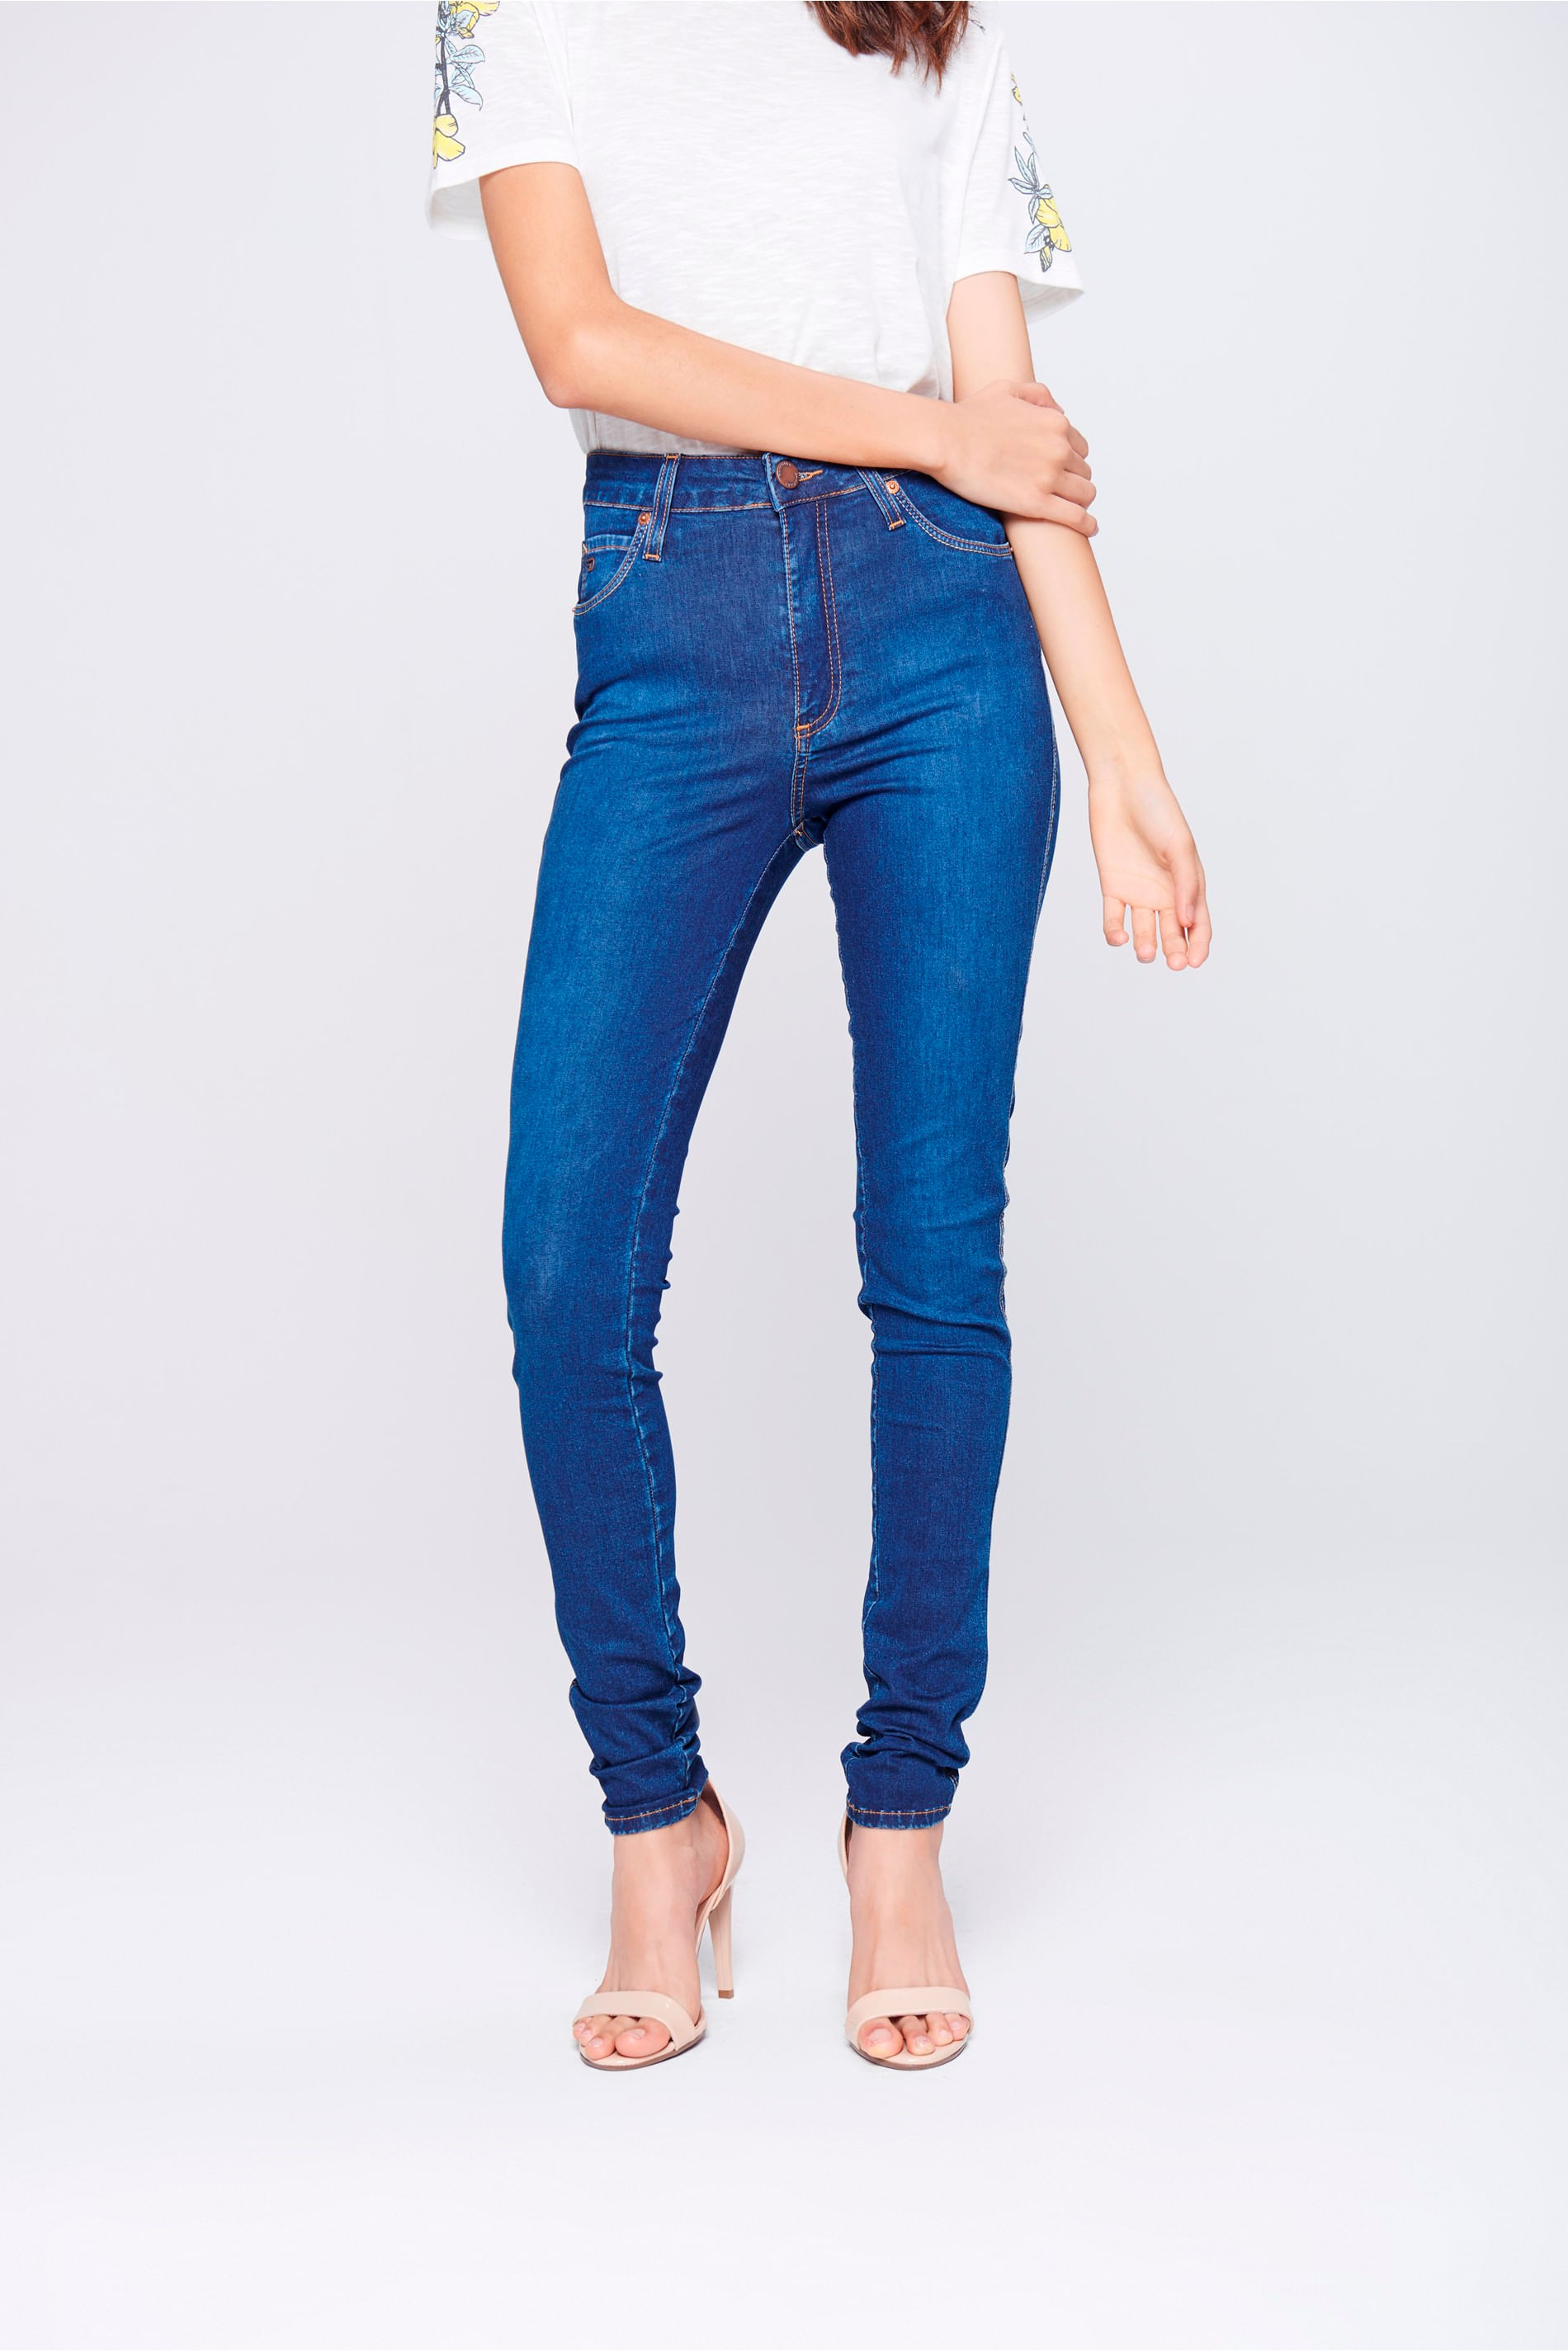 jeans skinny feminino